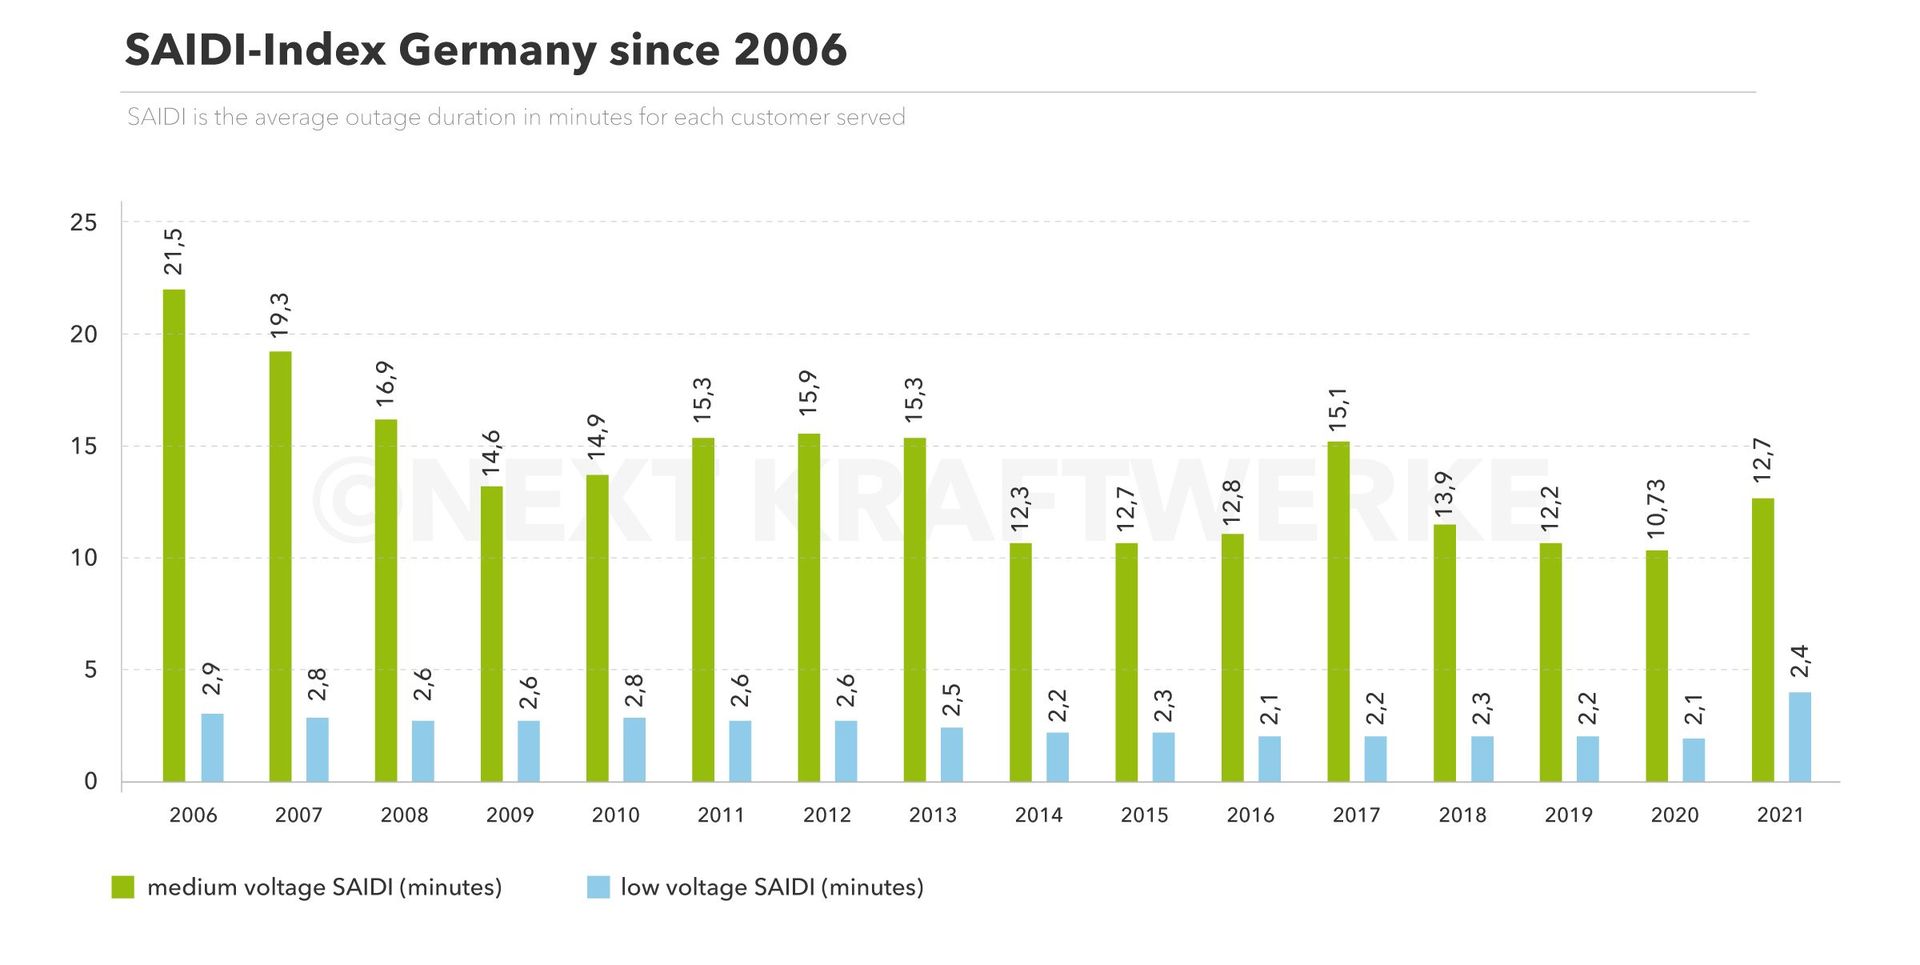 Medium und low voltage SAIDI in Germany since 2006.